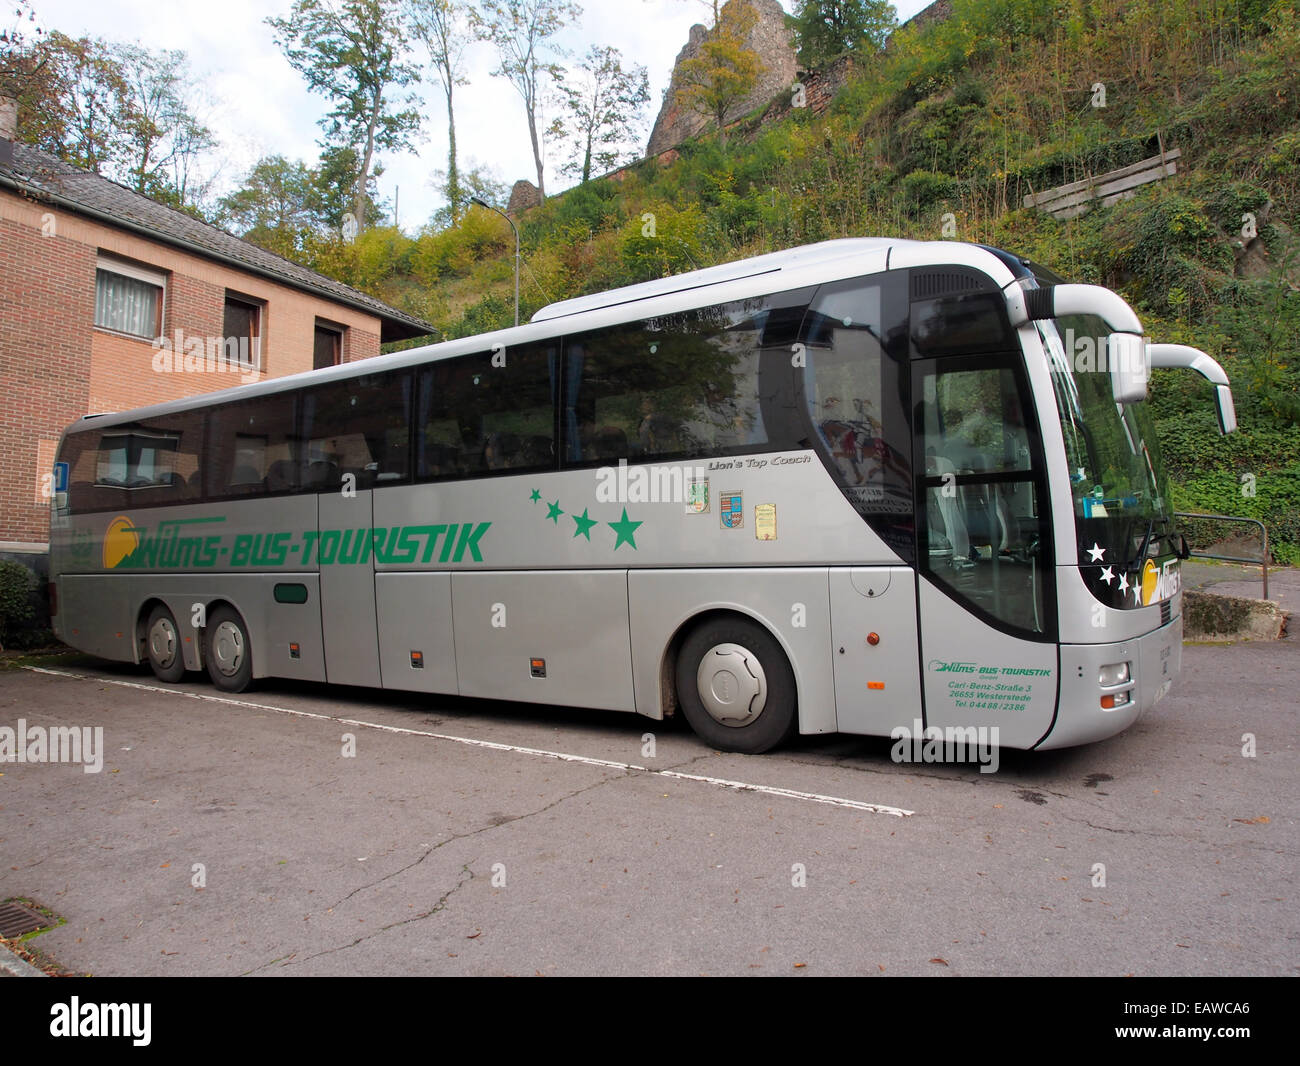 MAN coach, Wilms-bus-touristik in Saarburg, bild 1 Stock Photo